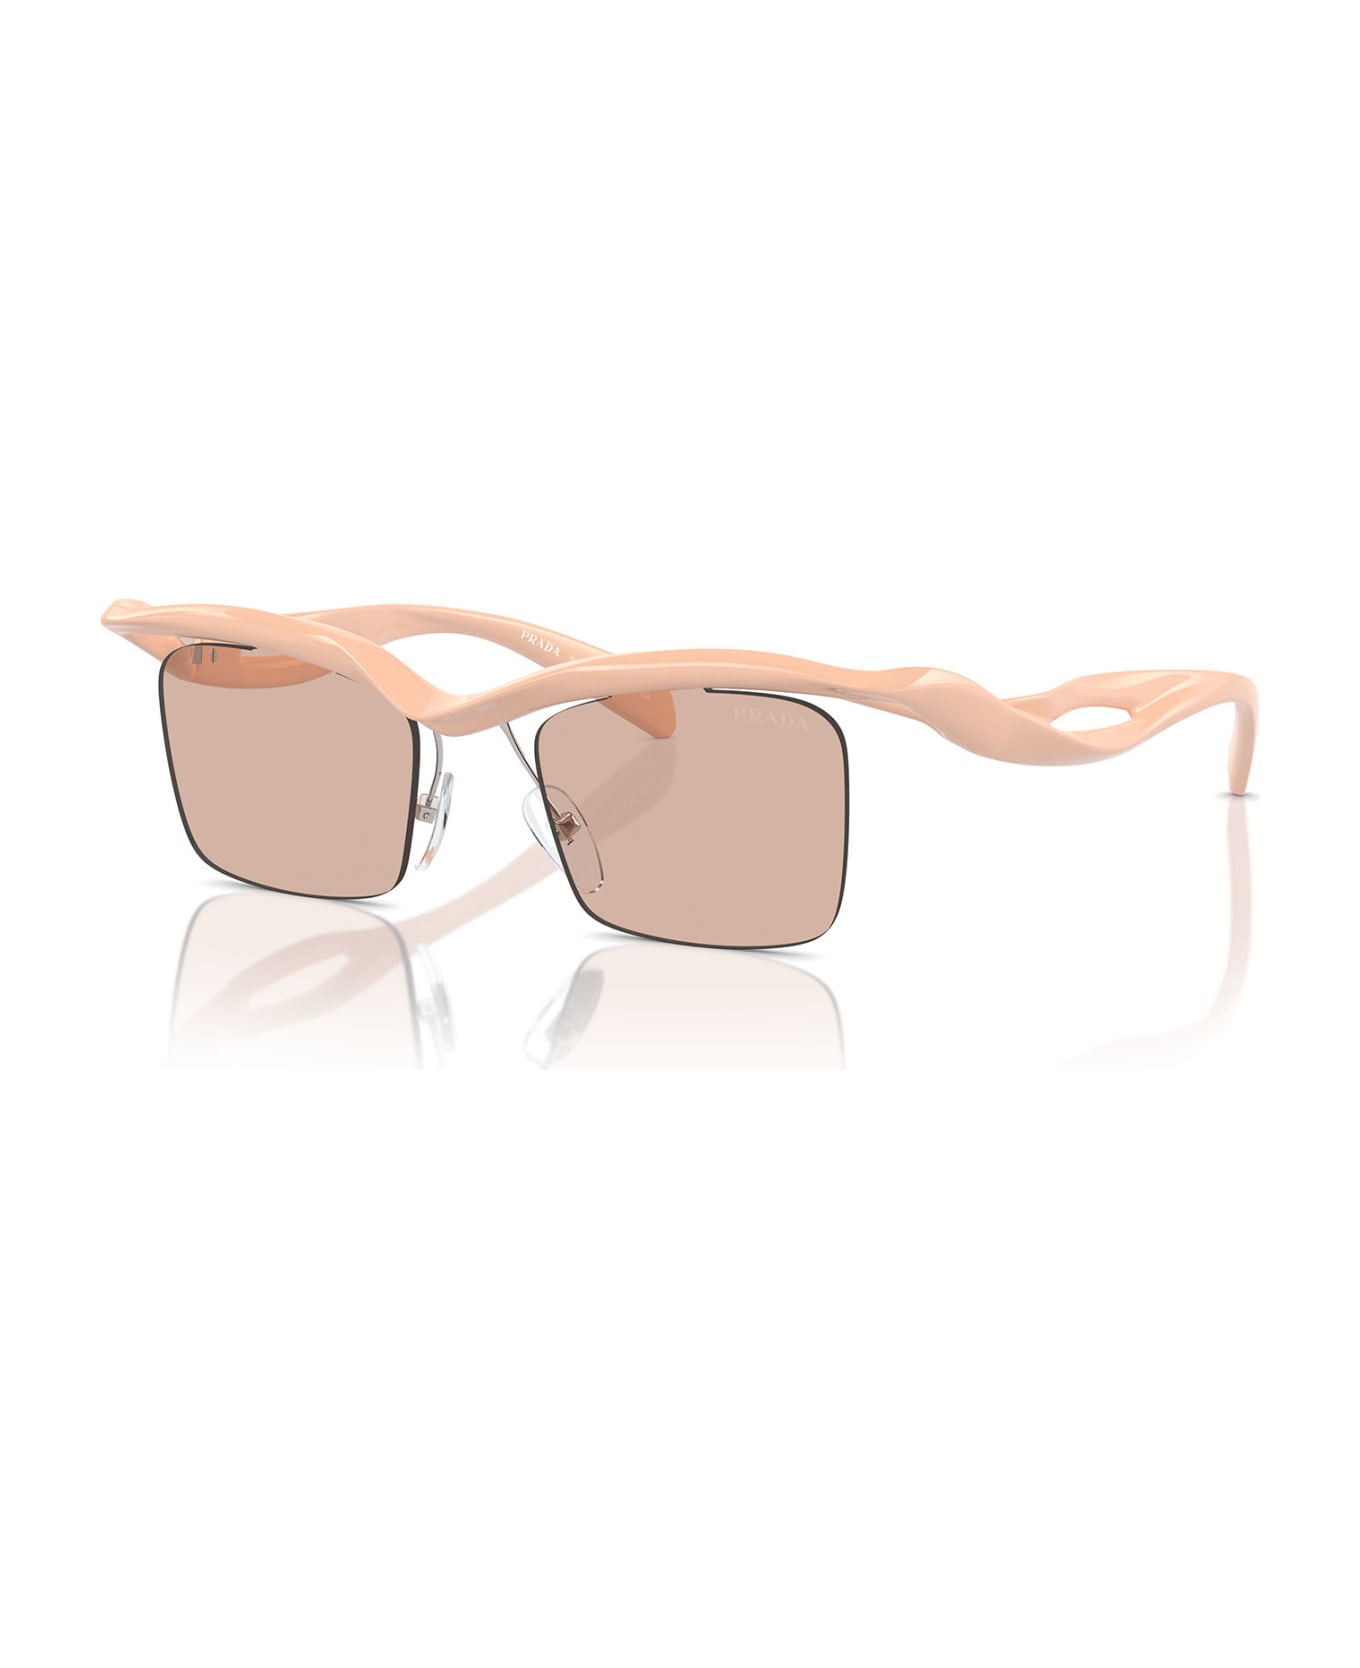 Prada Eyewear Pr A15s Peach Sunglasses - Peach